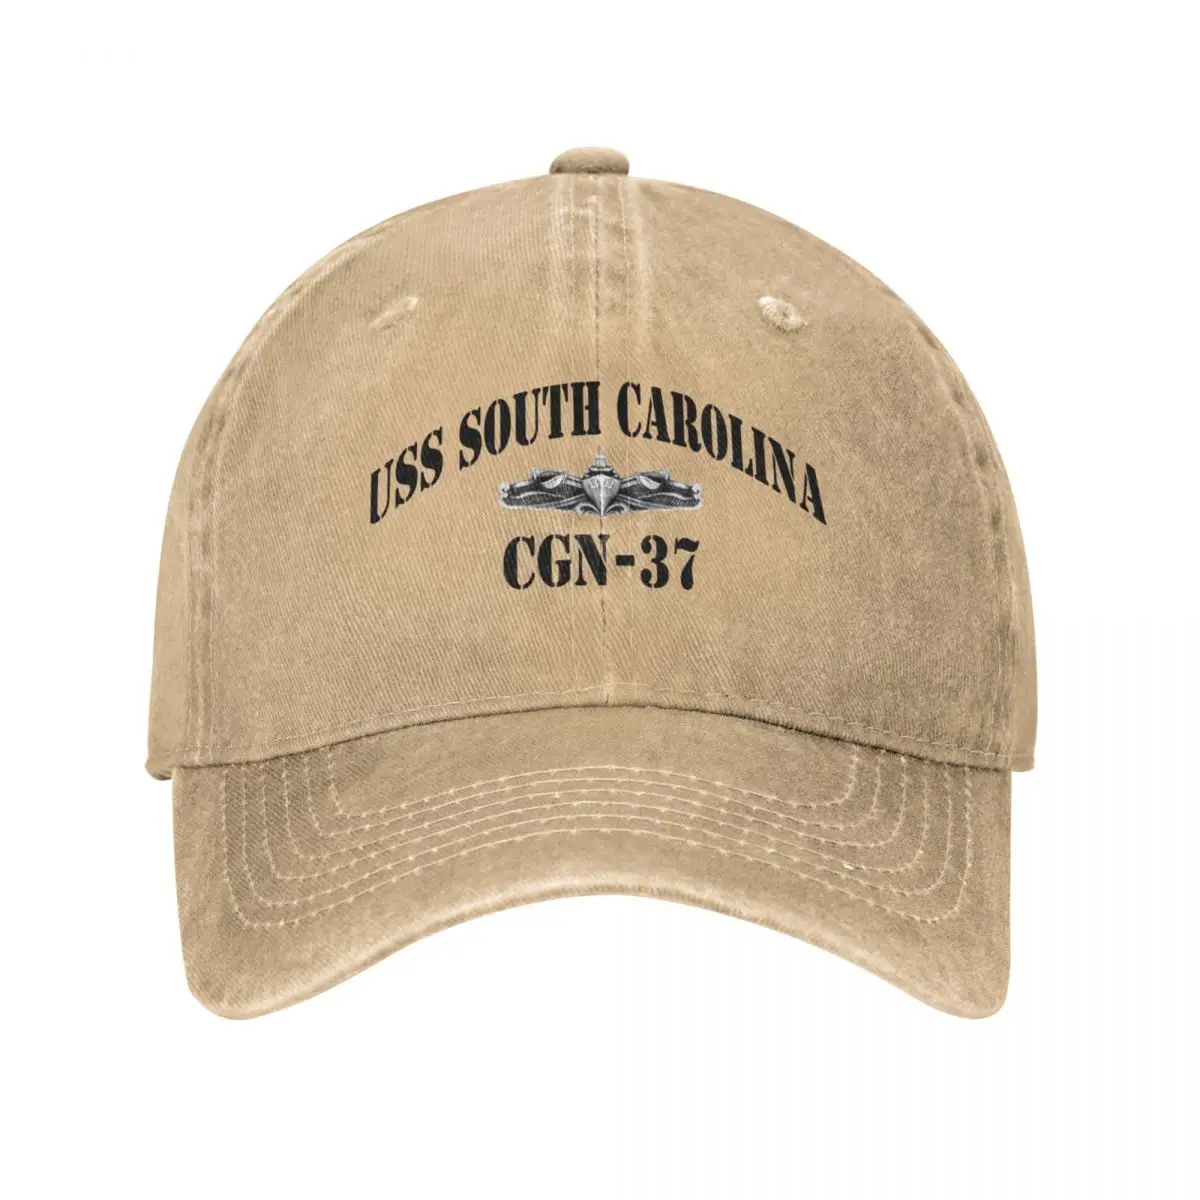 

USS SOUTH CAROLINA (CGN-37) SHIP'S STORE Cap Cowboy Hat Caps icon hats for women Men's